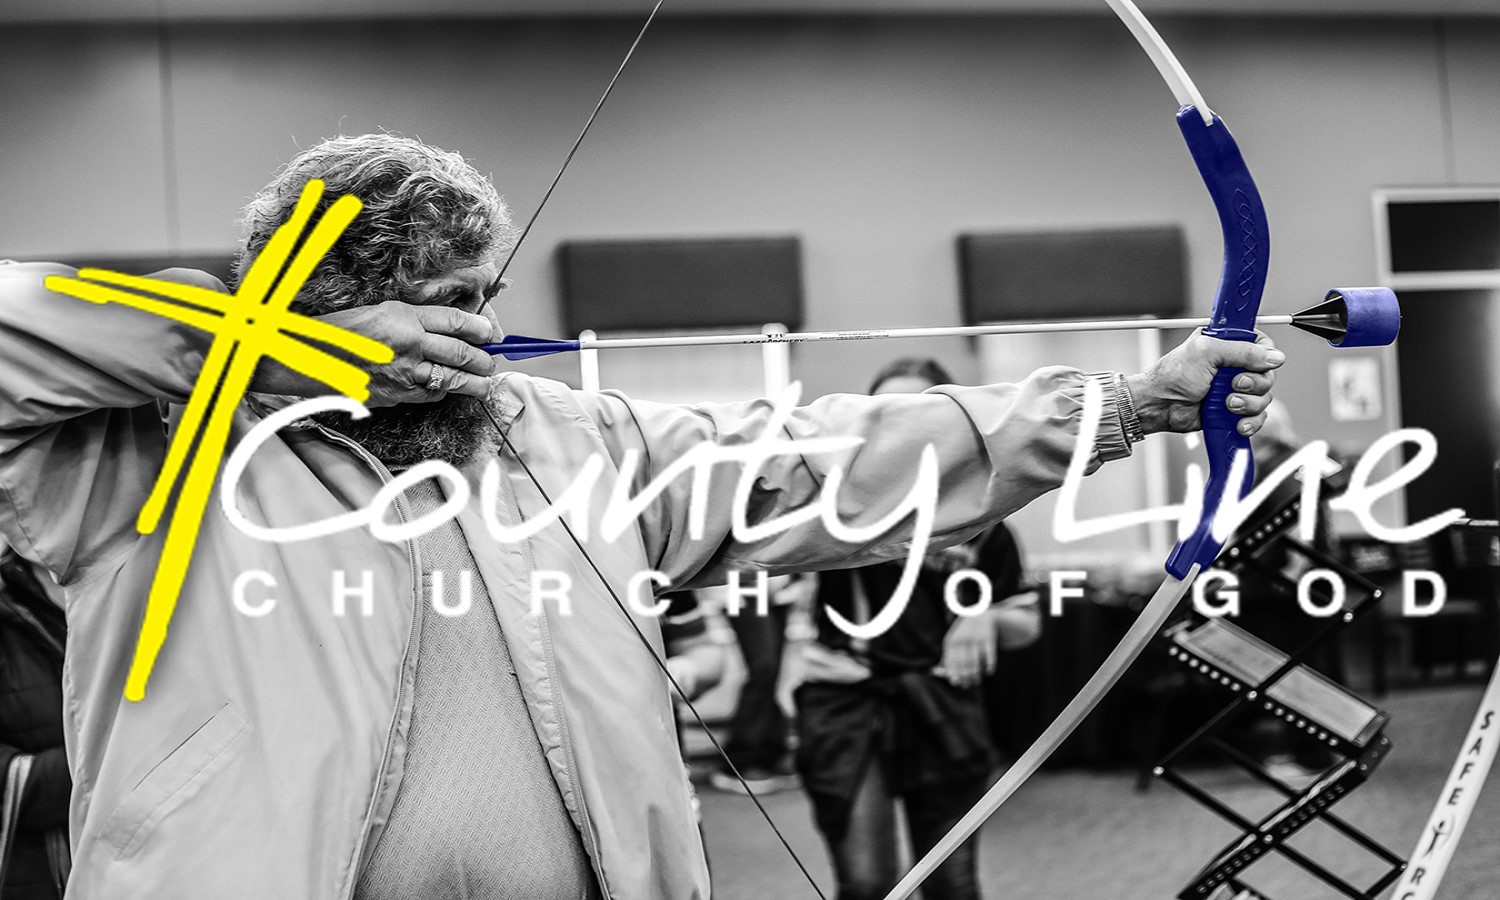 County Line Church of God Souper Bowl 2019